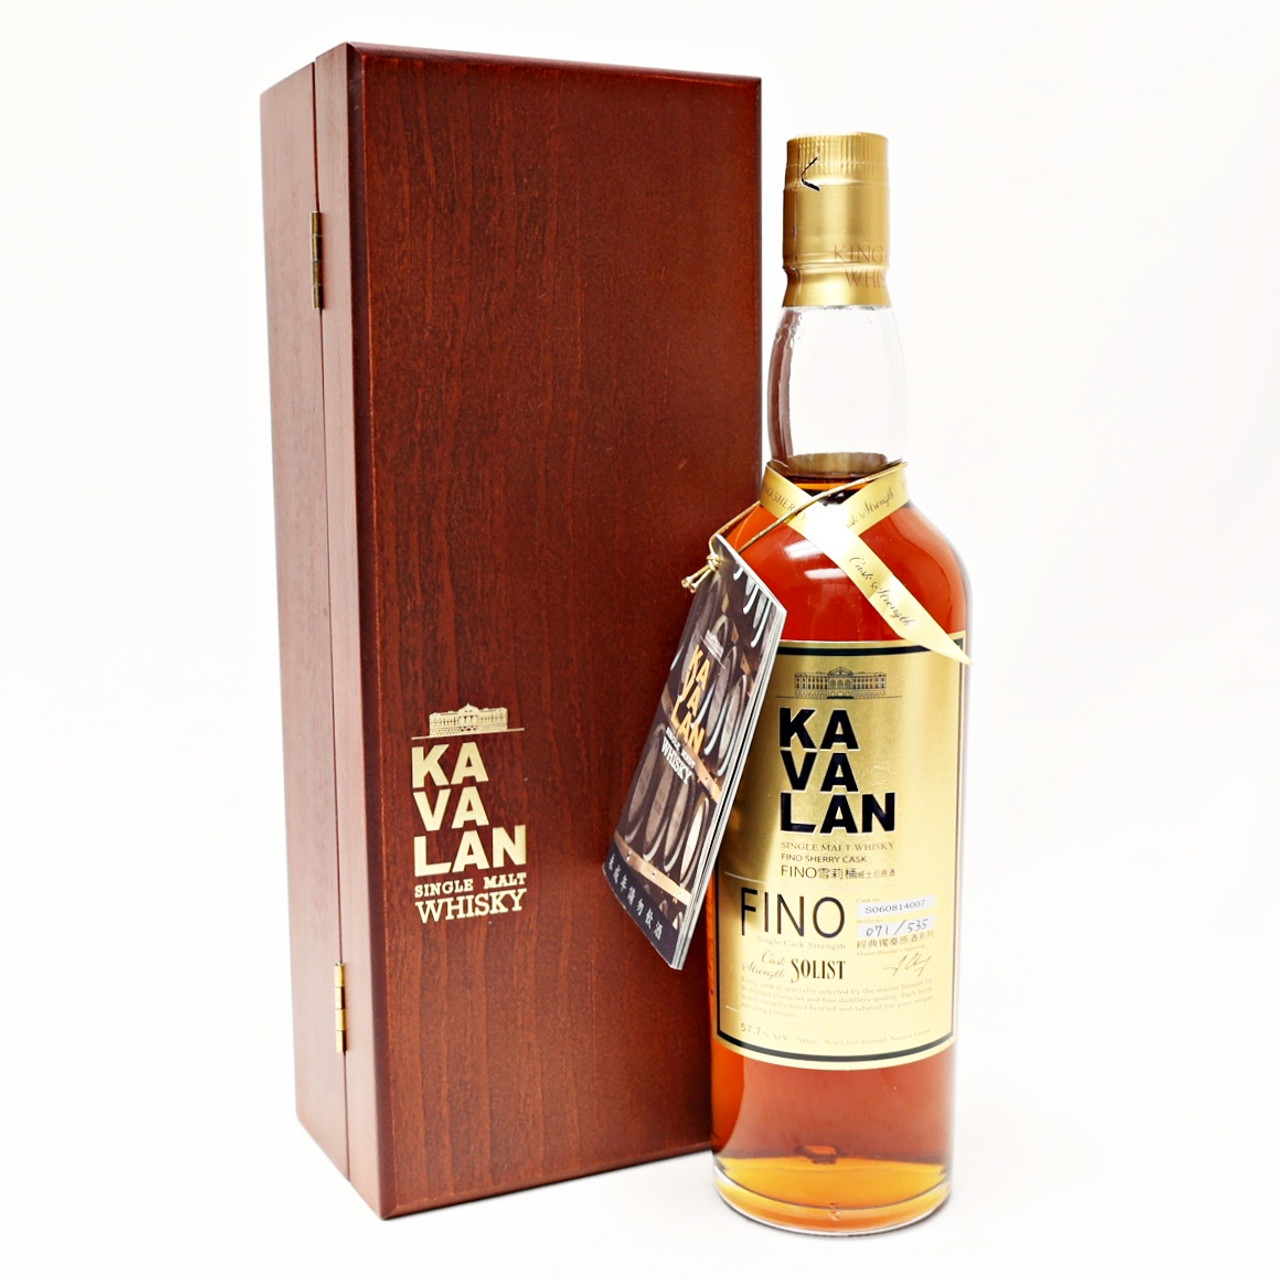 Kavalan Solist Fino Sherry Cask Strength Single Malt Whisky ...